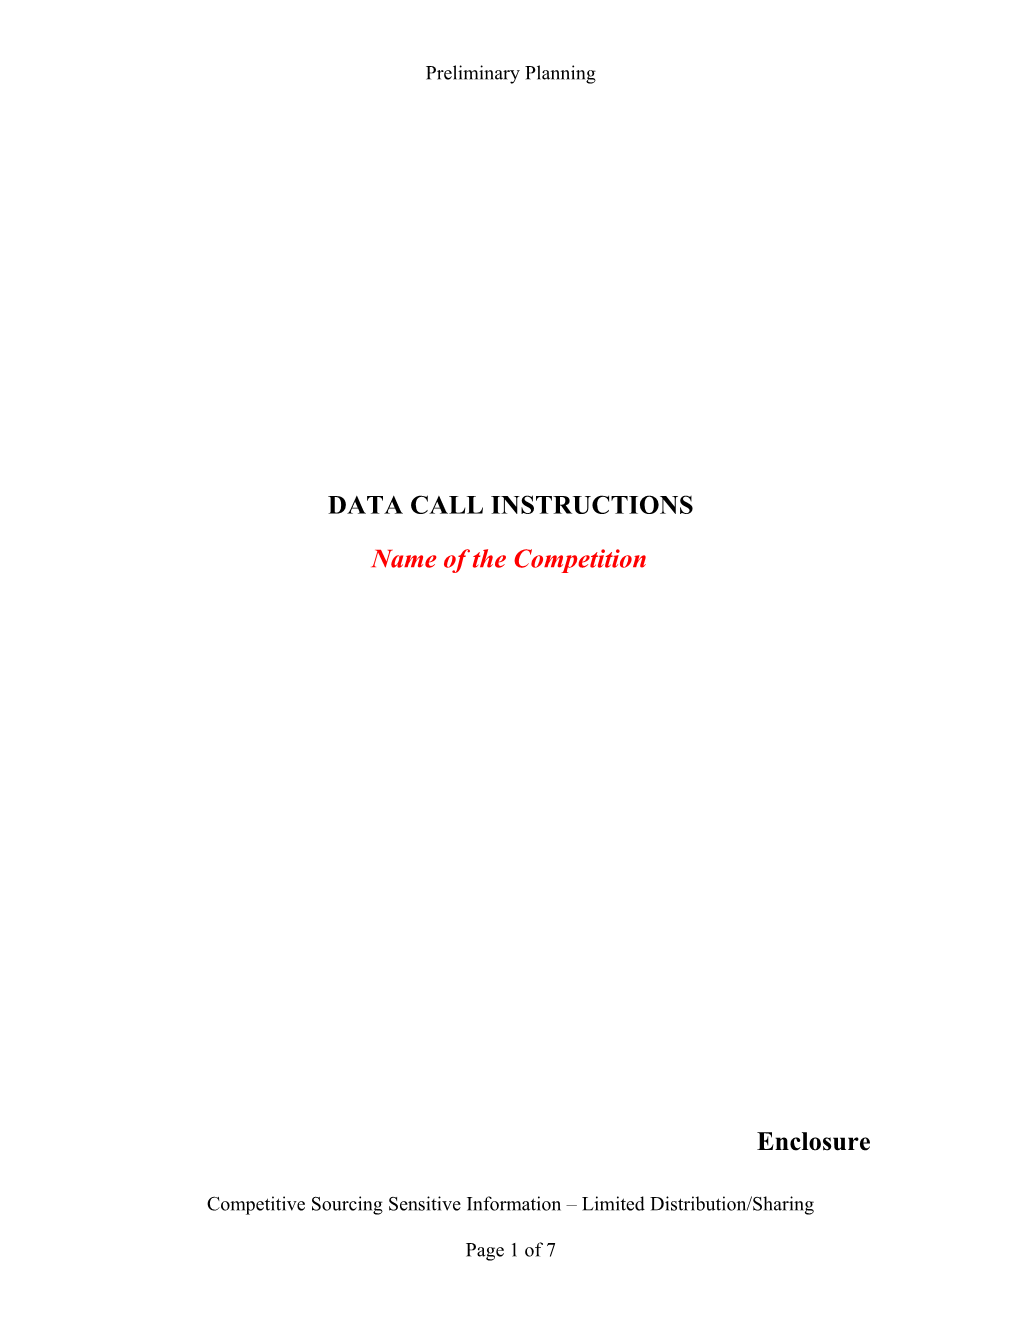 Data Call Instructions for O&M of Navlocks